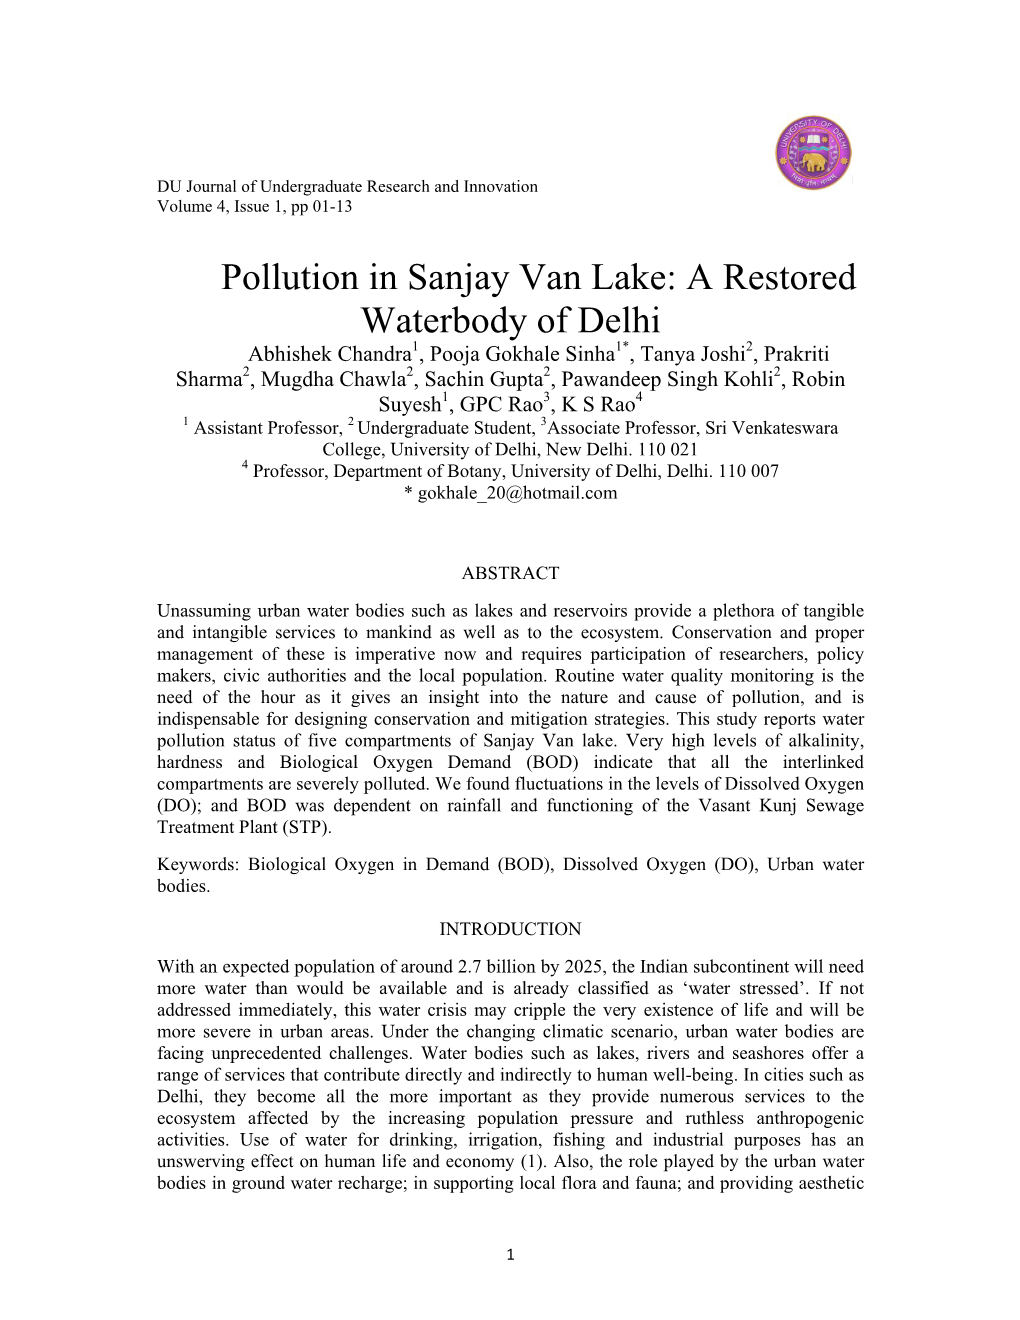 Pollution in Sanjay Van Lake: a Restored Waterbody of Delhi